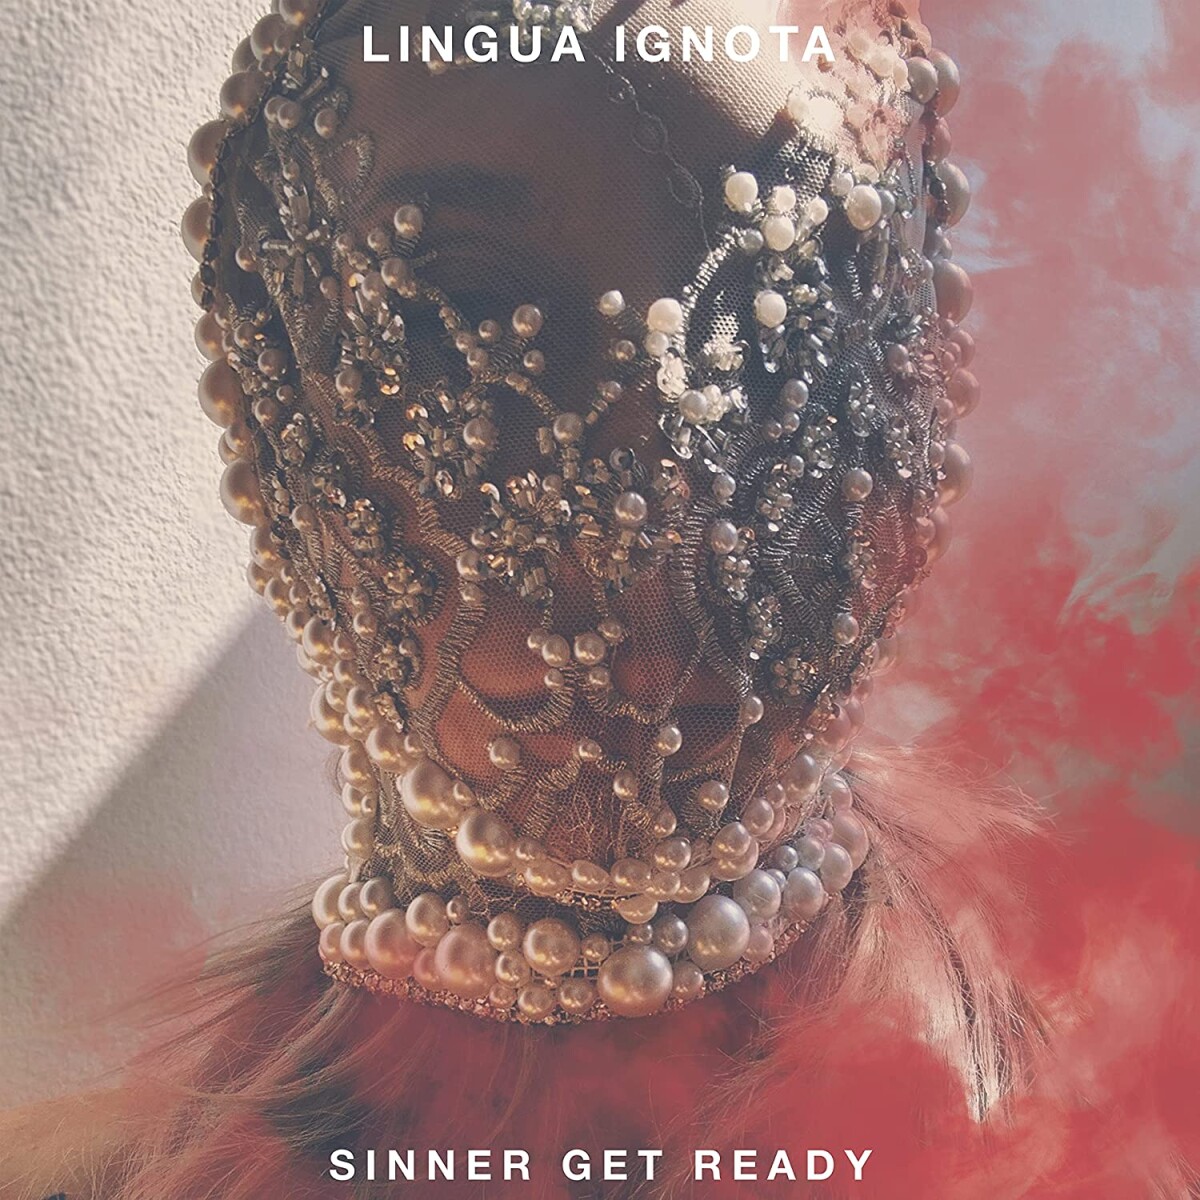 lingua-ignota-sinner-get-ready